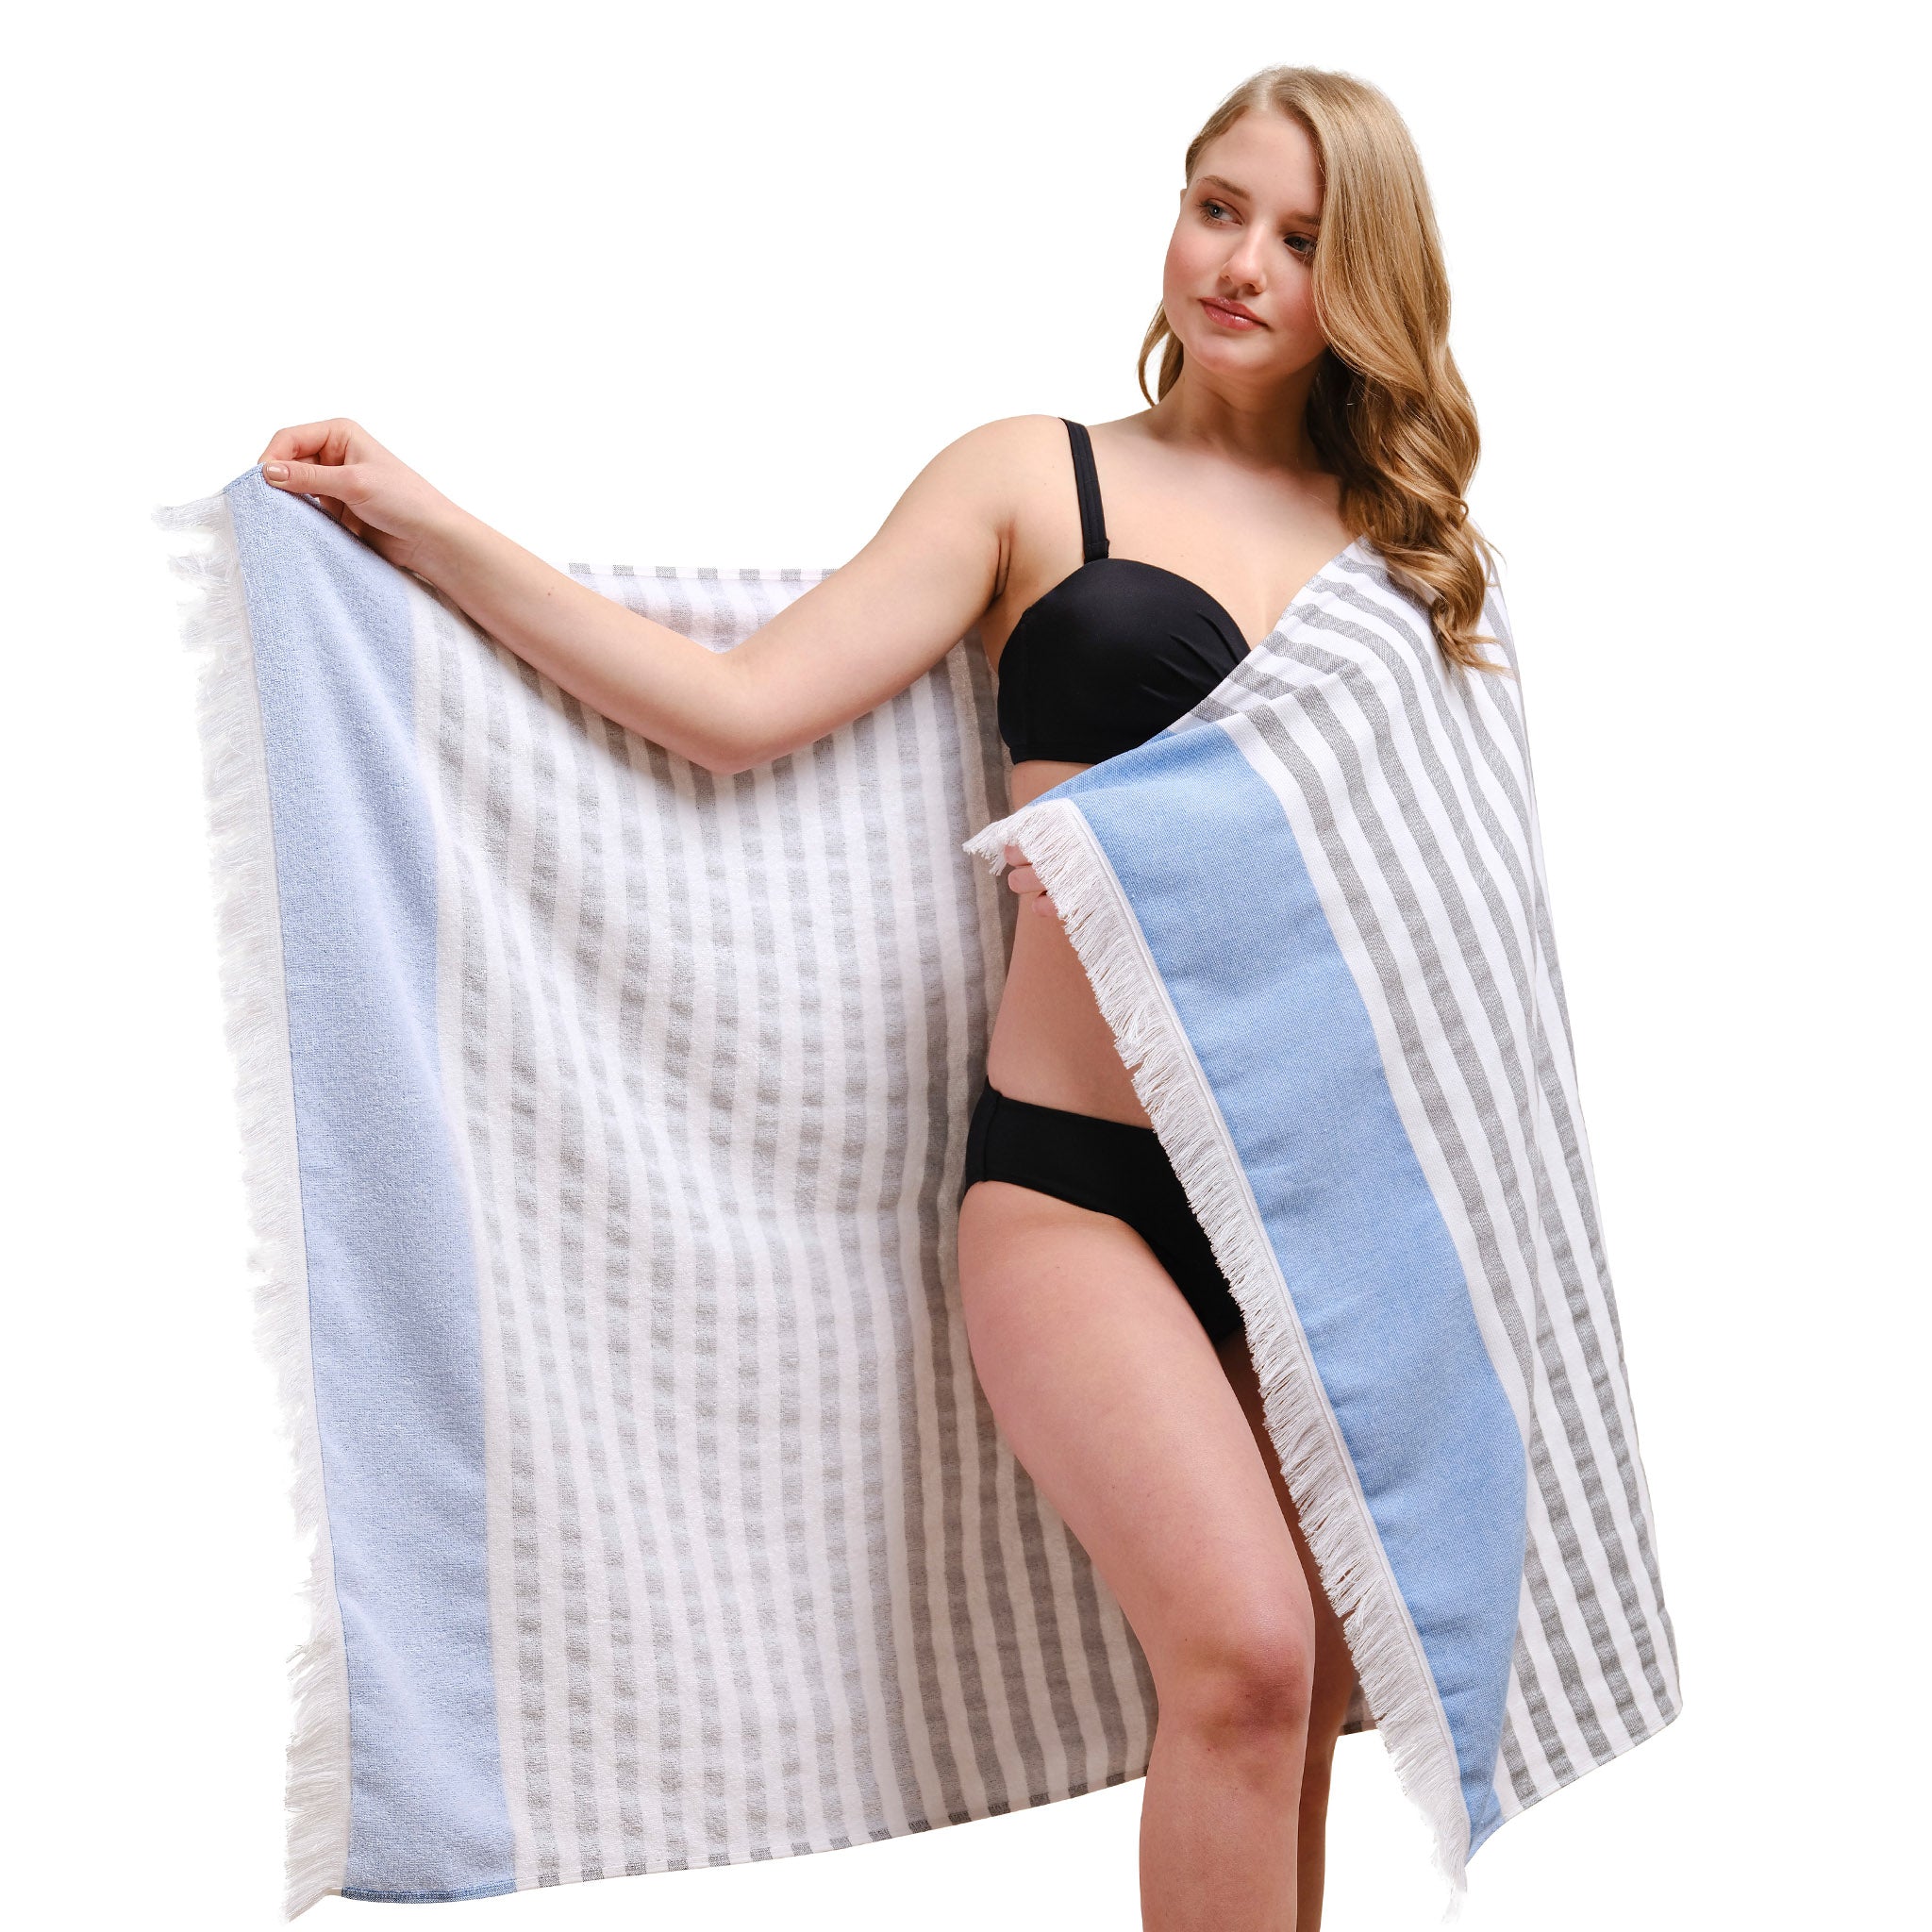 Wholesale Premium Self-Striped Bath Towels Manufacturers & Suppliers in  USA, UK, Australia